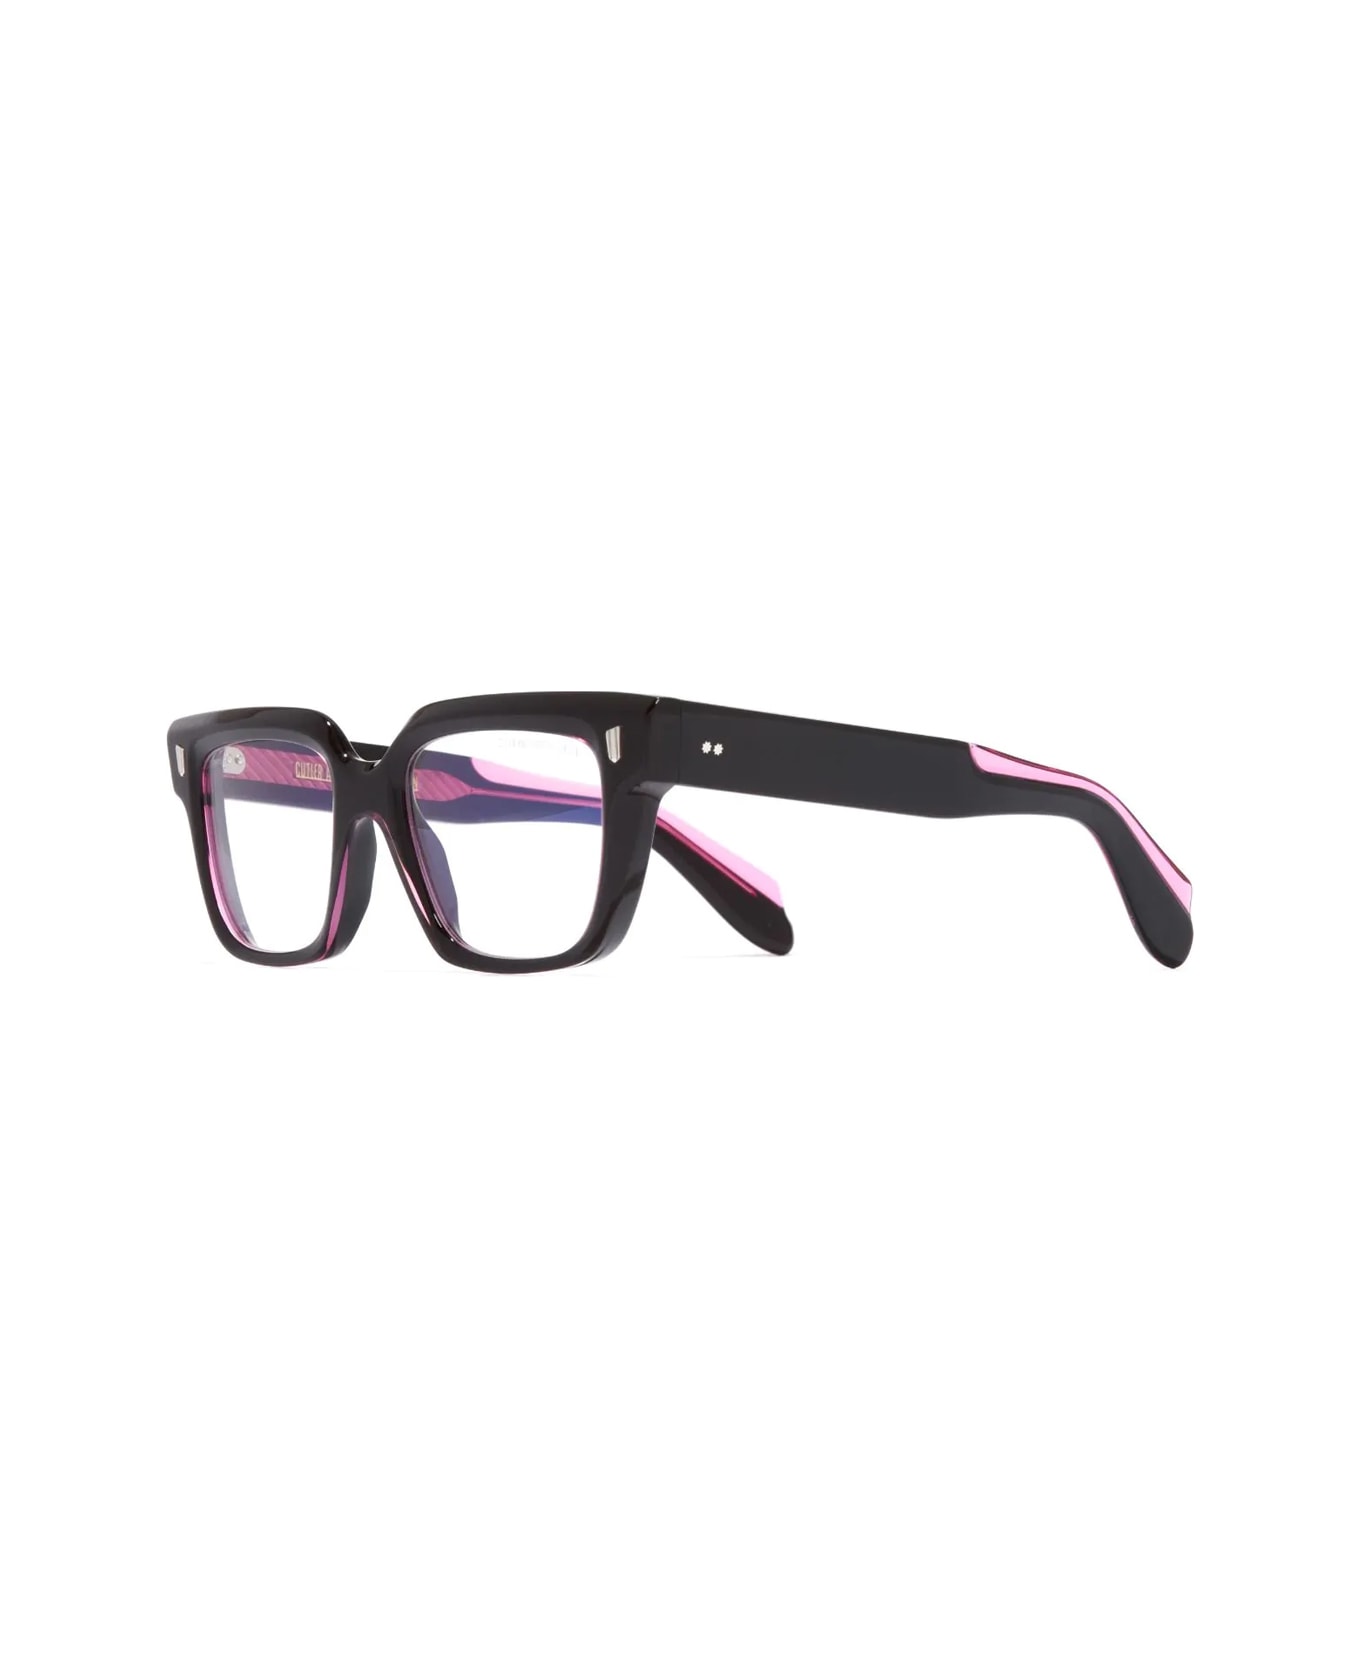 Cutler and Gross 9347 01 Glasses - Nero アイウェア